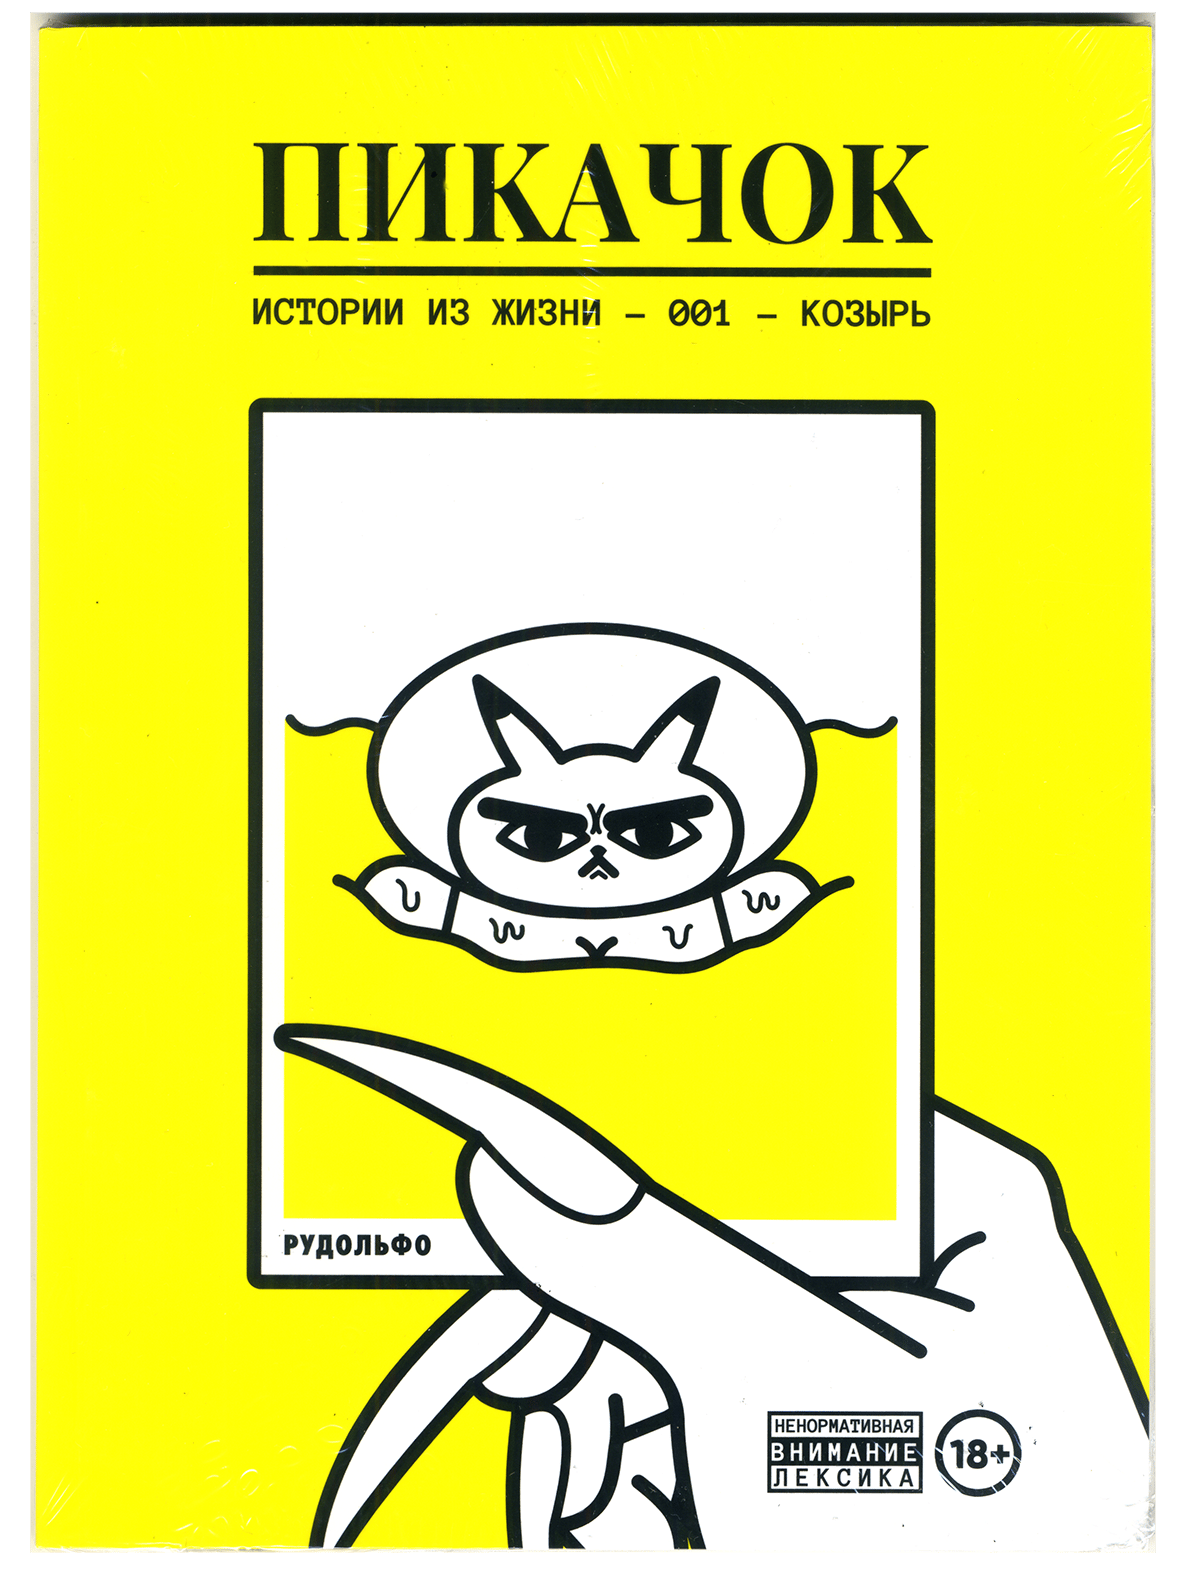 ПИКАЧОК: КОЗЫРЬ by RUDOLFO (regular edition)